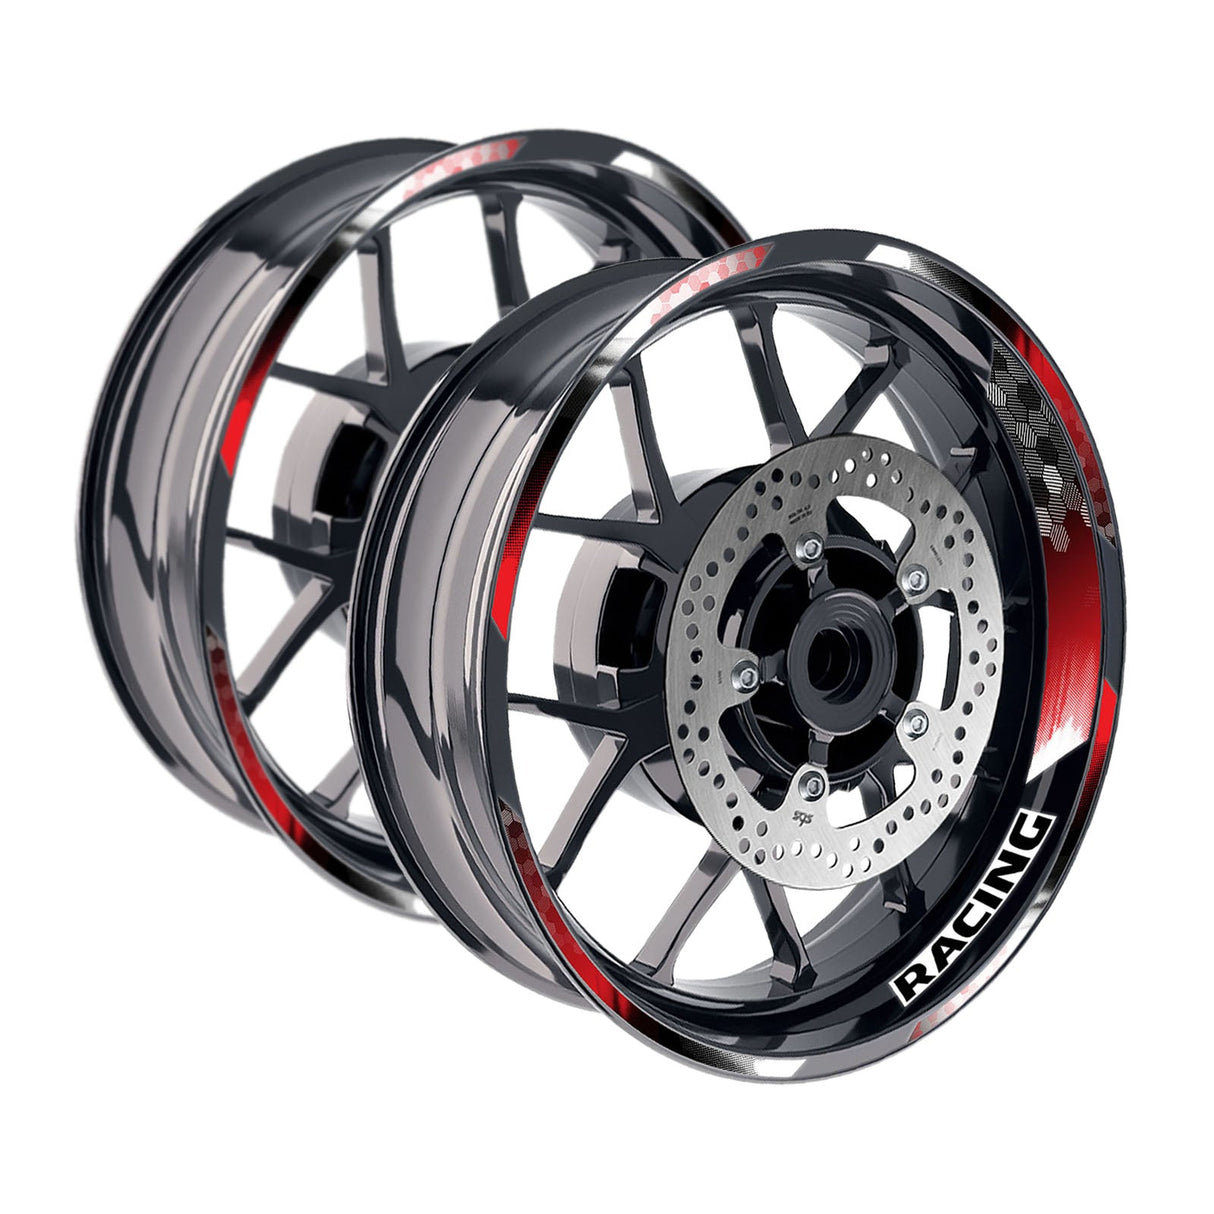 StickerBao Red 17 inch GP18 Platinum Inner Edge Rim Sticker Universal Motorcycle Rim Wheel Decal Racing For Honda